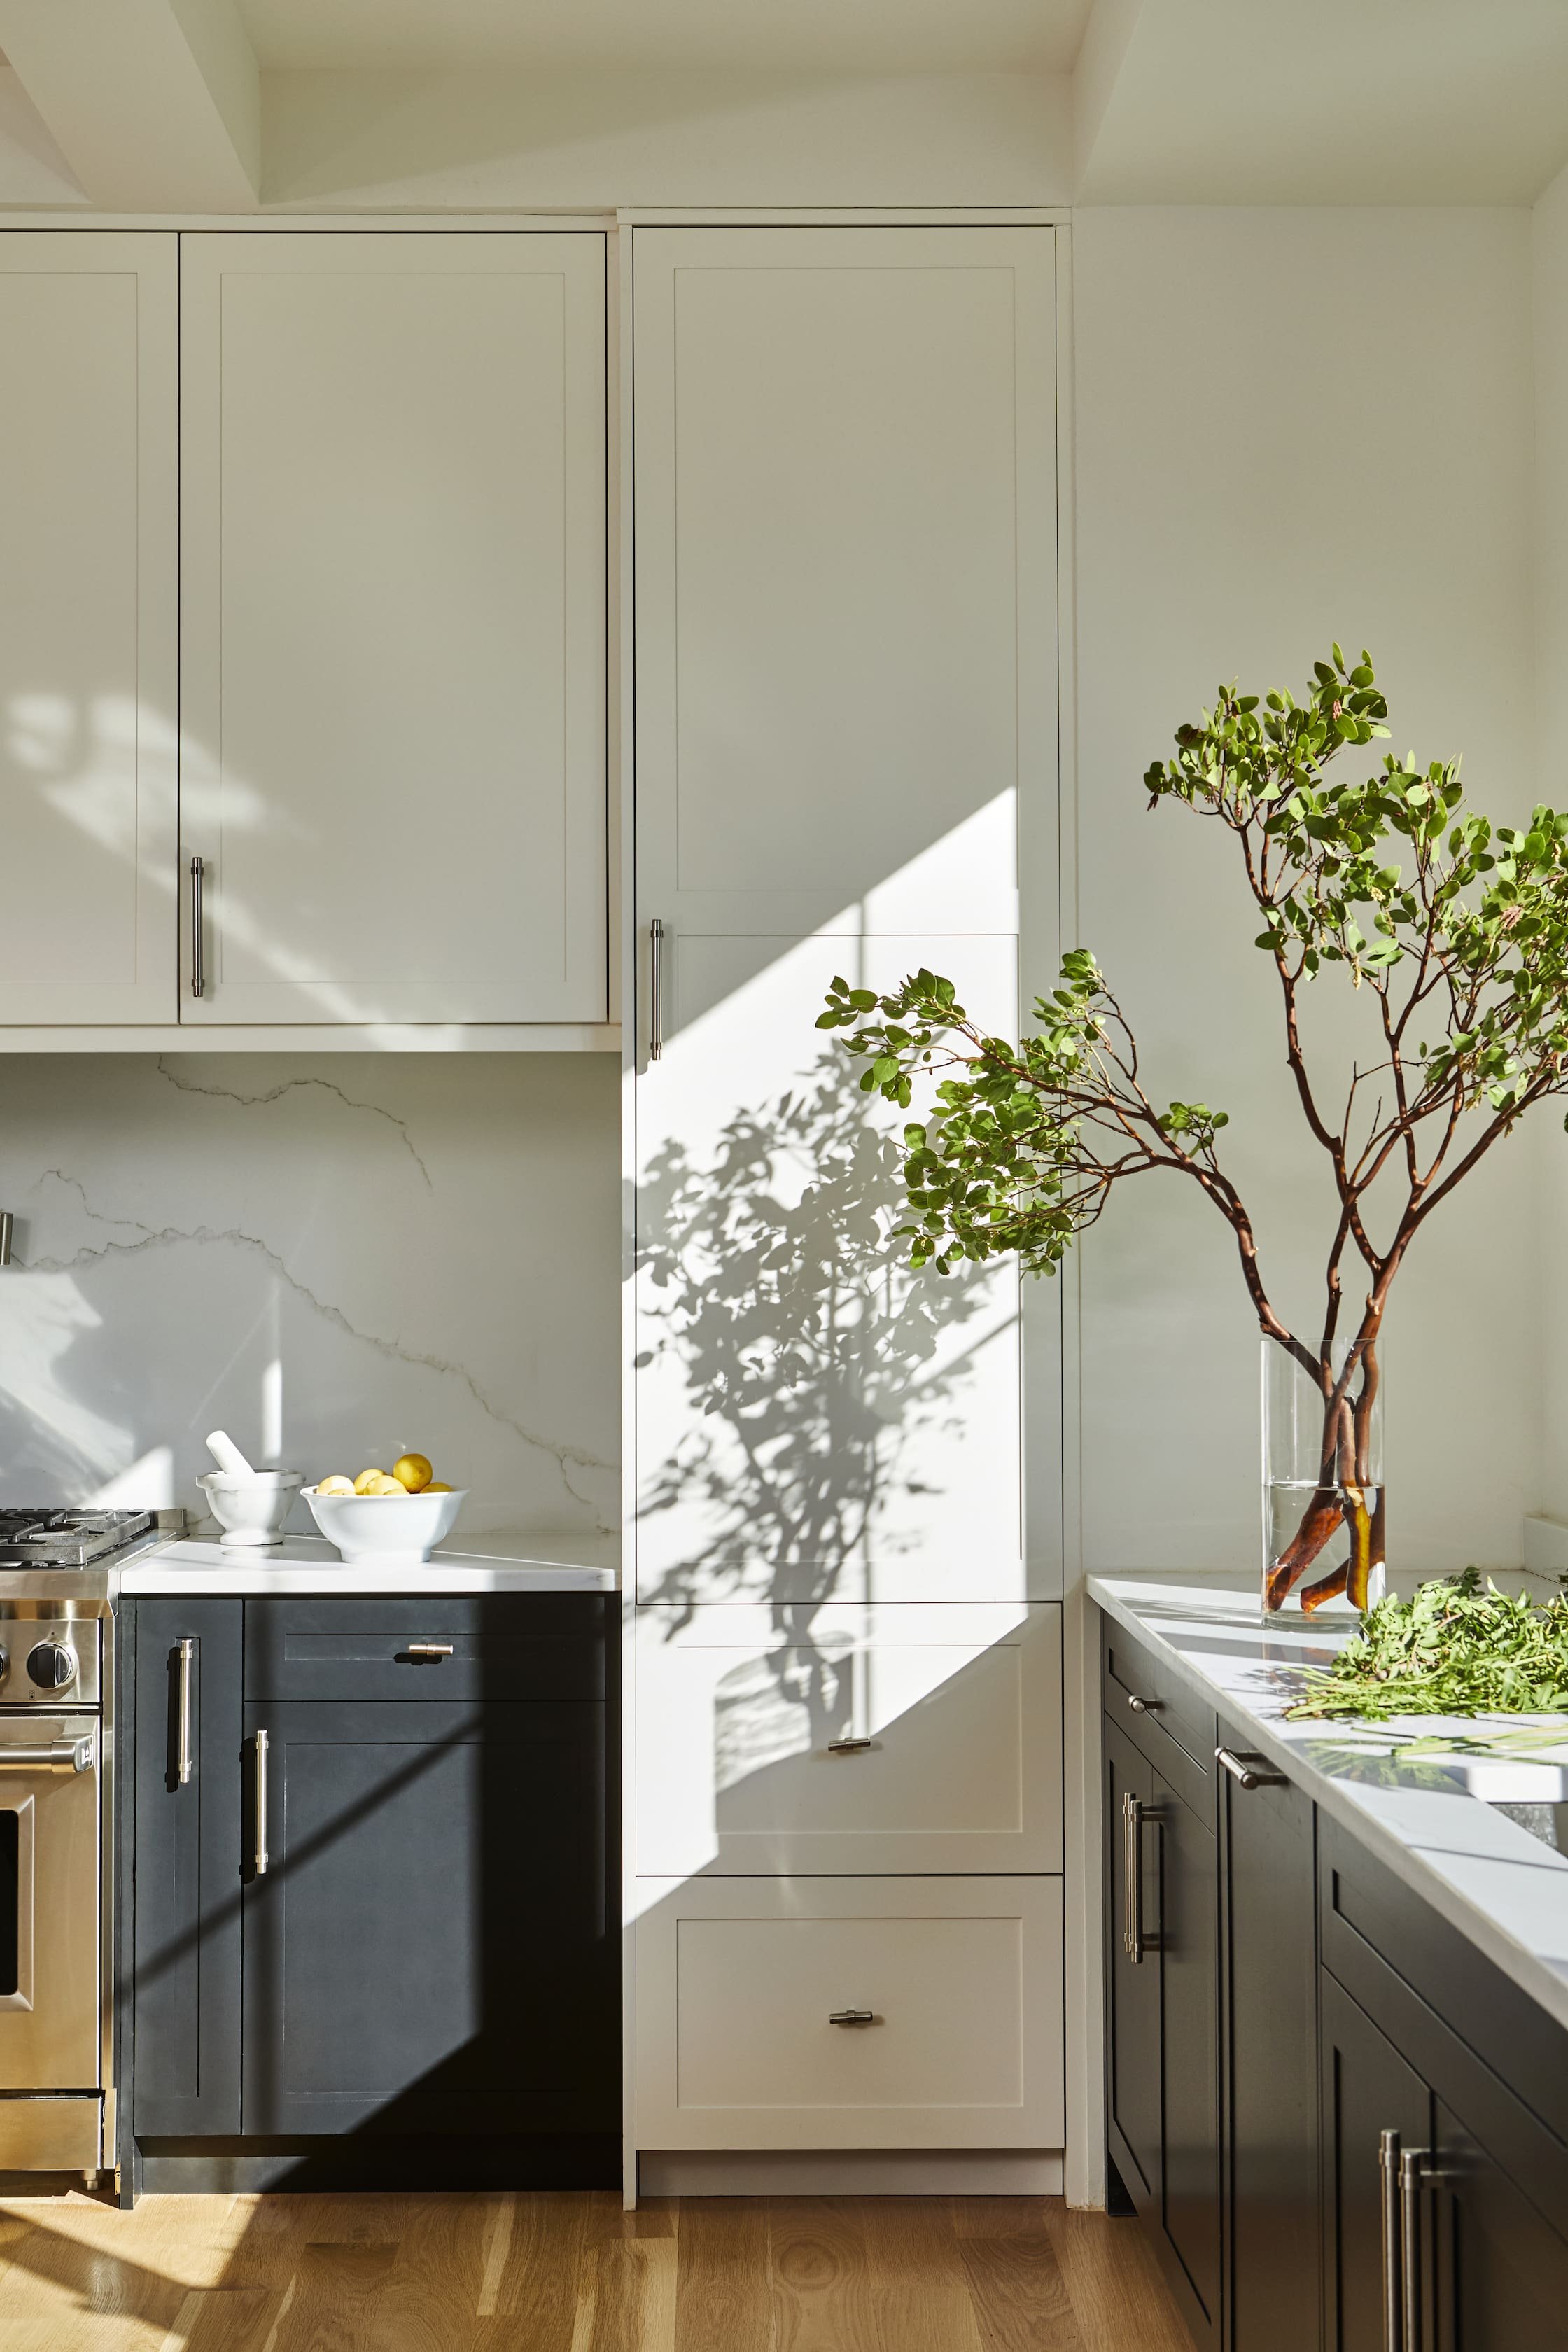 manzanita branches casting shadows in a modern kitchen for biophilic interior design example.jpg